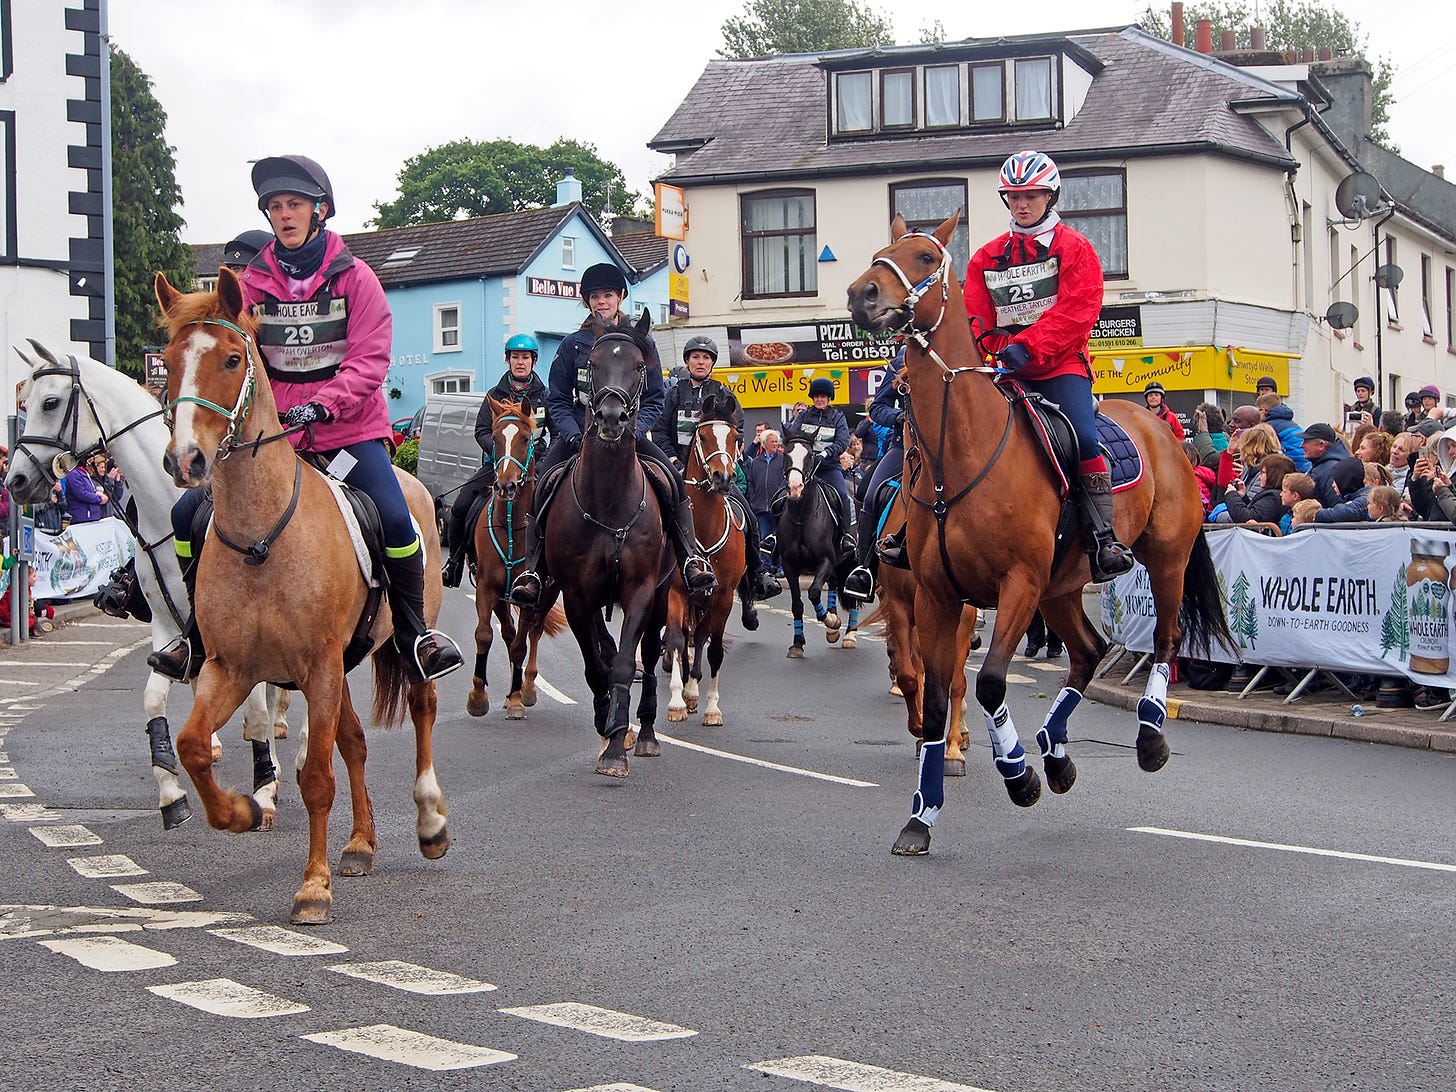 Man V Horse Race – Visit Llanwrtyd Wells